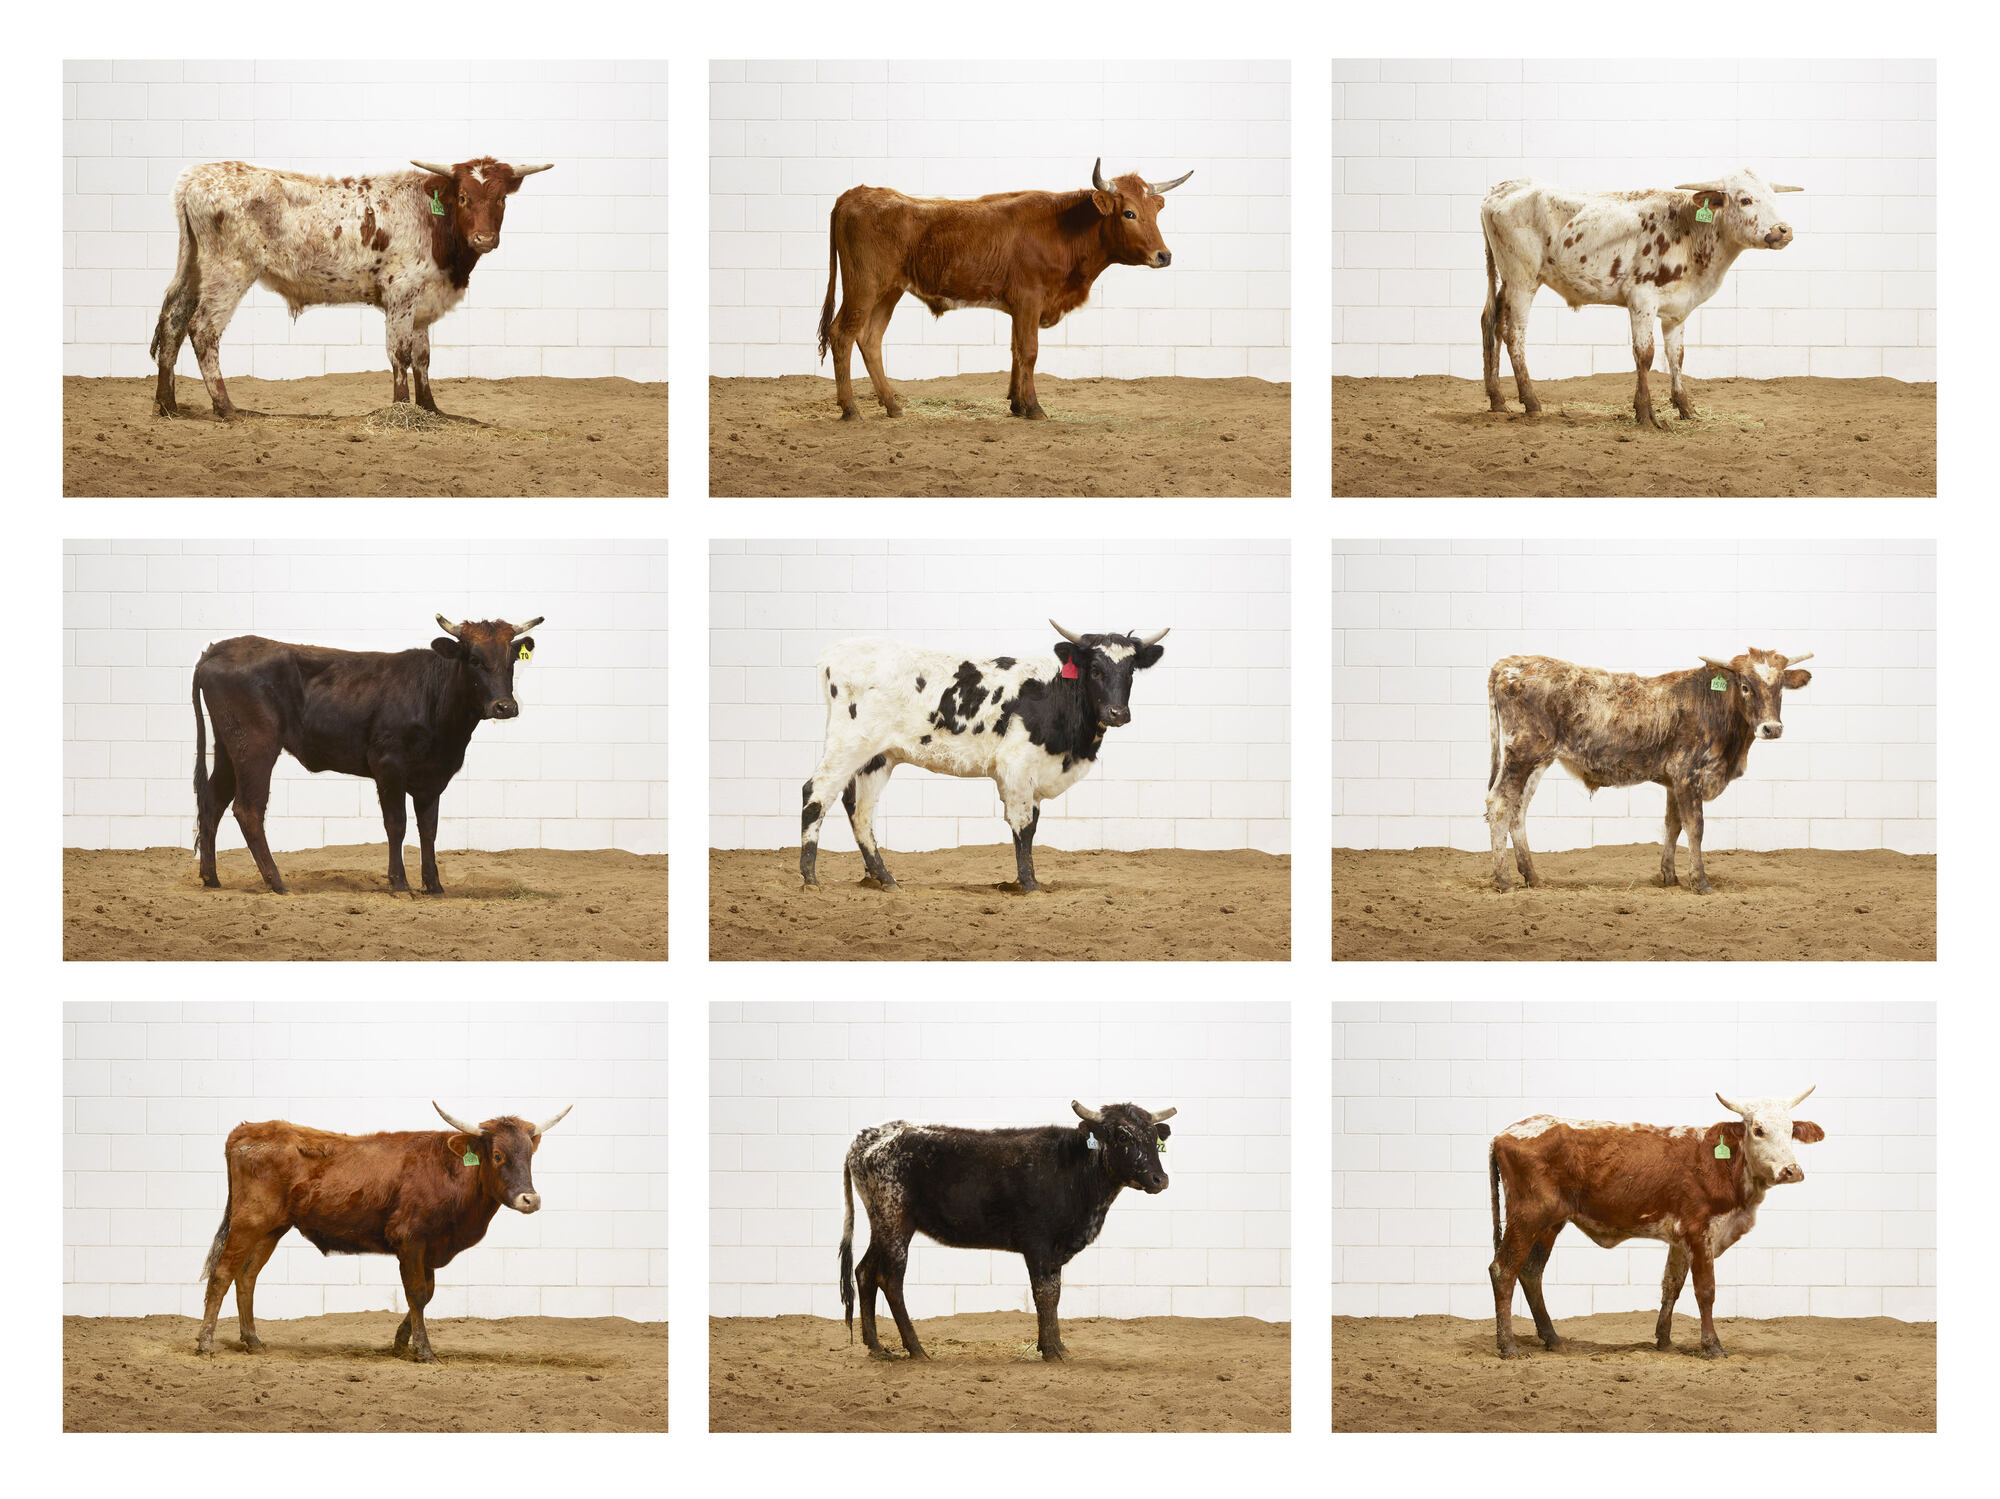 Dwight Eschliman's cattle potraits